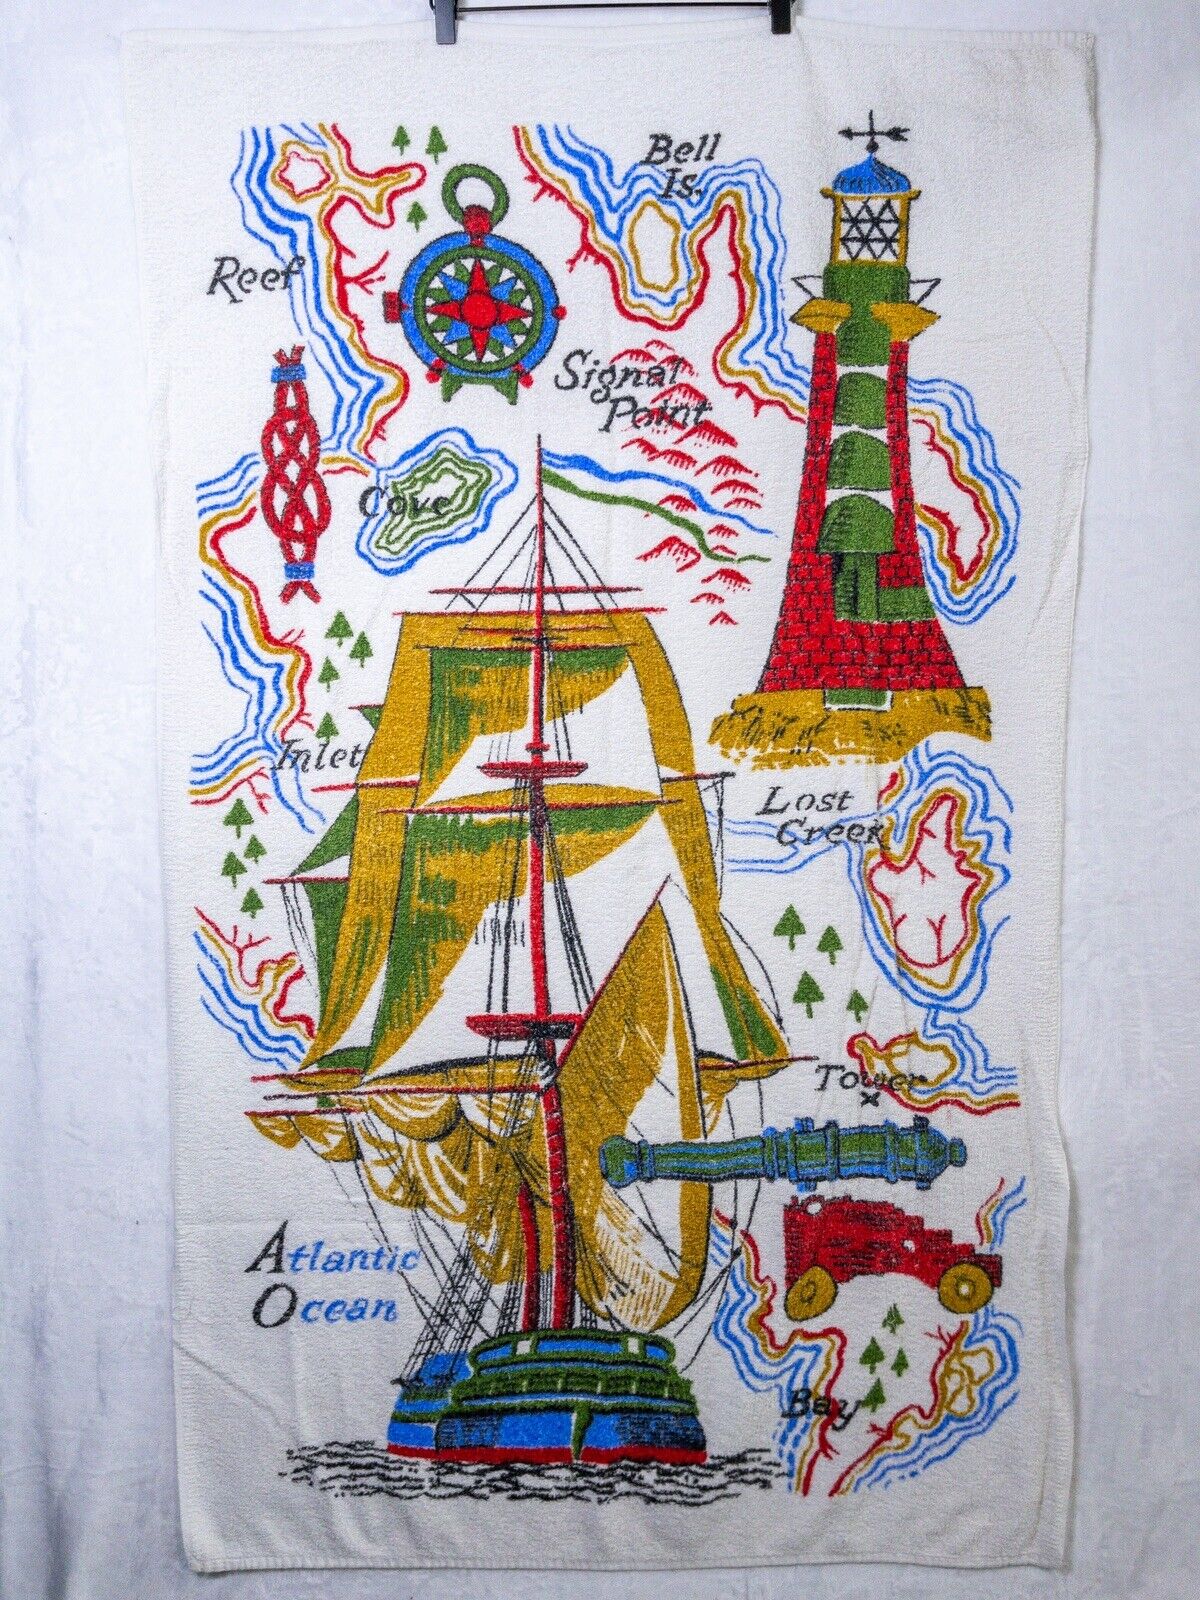 Vintage Retro Galleon Ship Pirate Treasure Map Graphic Beach Towel 55x33